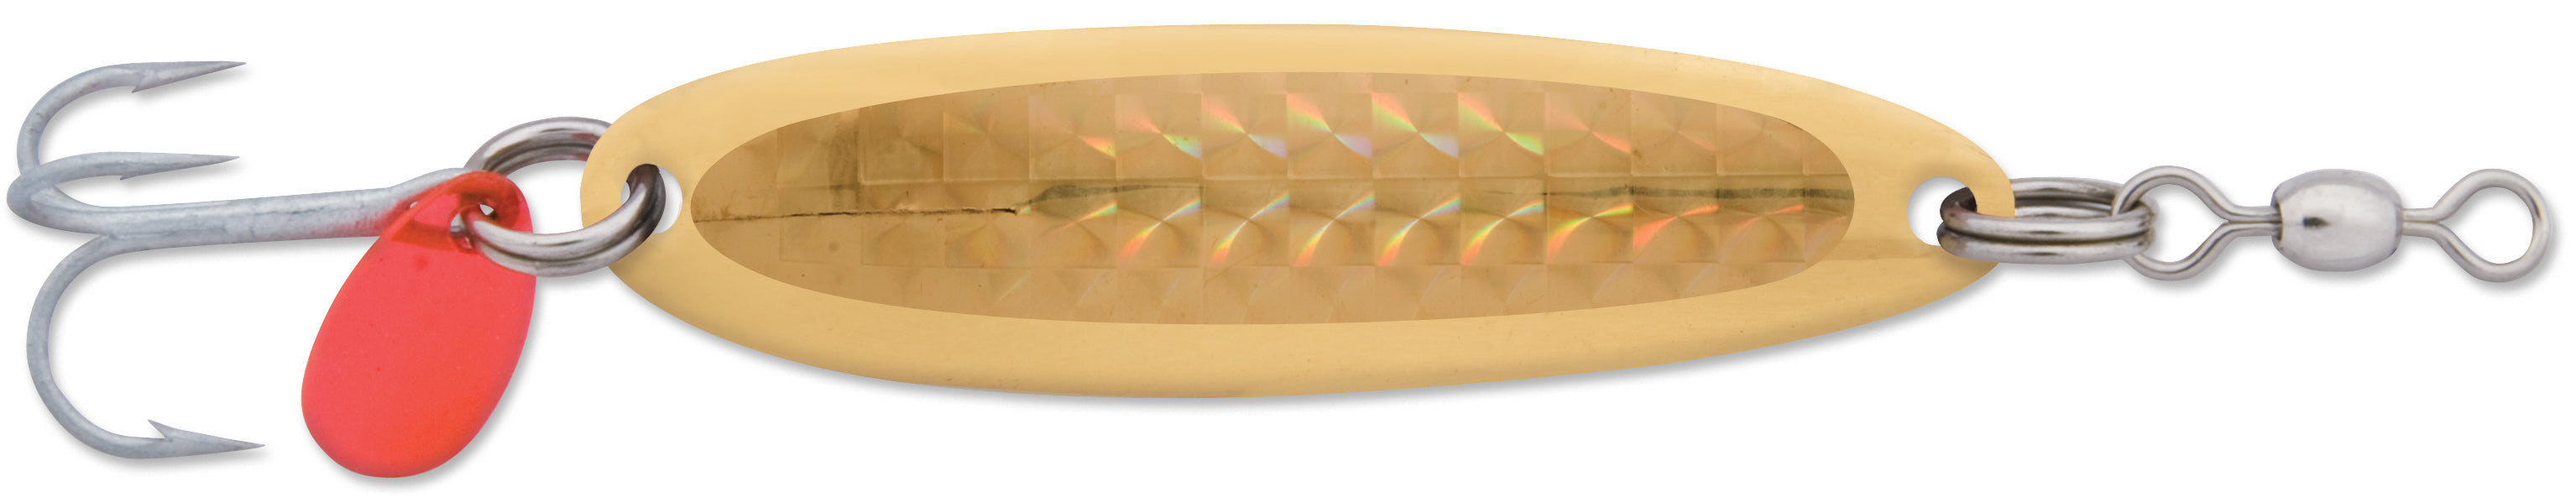 Luhr Jensen Krocodile Spoon - 1/2 oz - Brass/Gold Prism-Lite